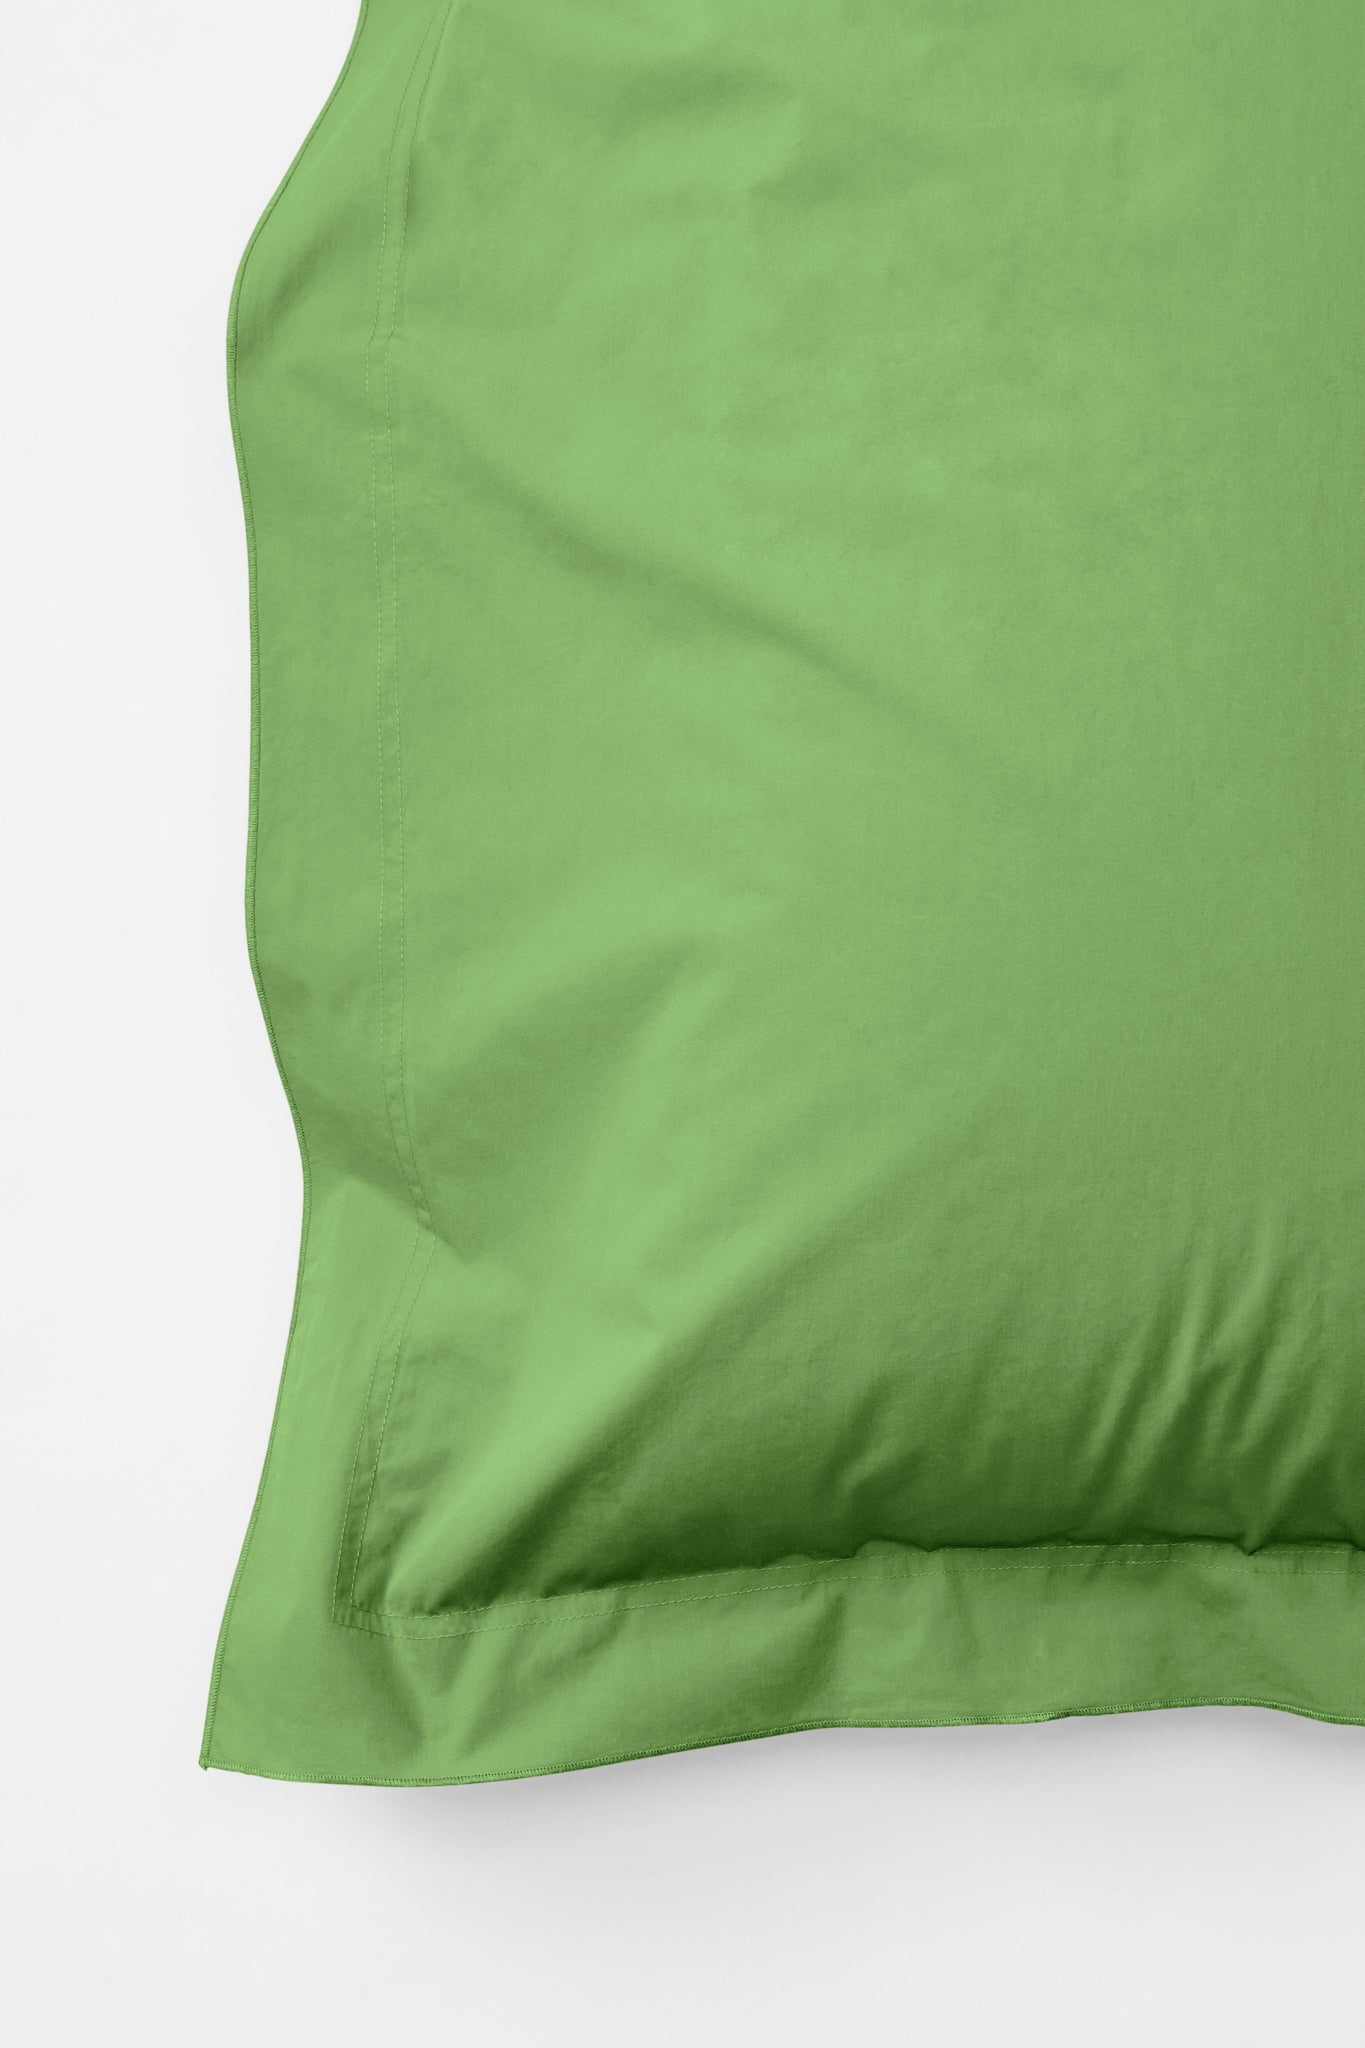 Pillowcase Pair in Apple